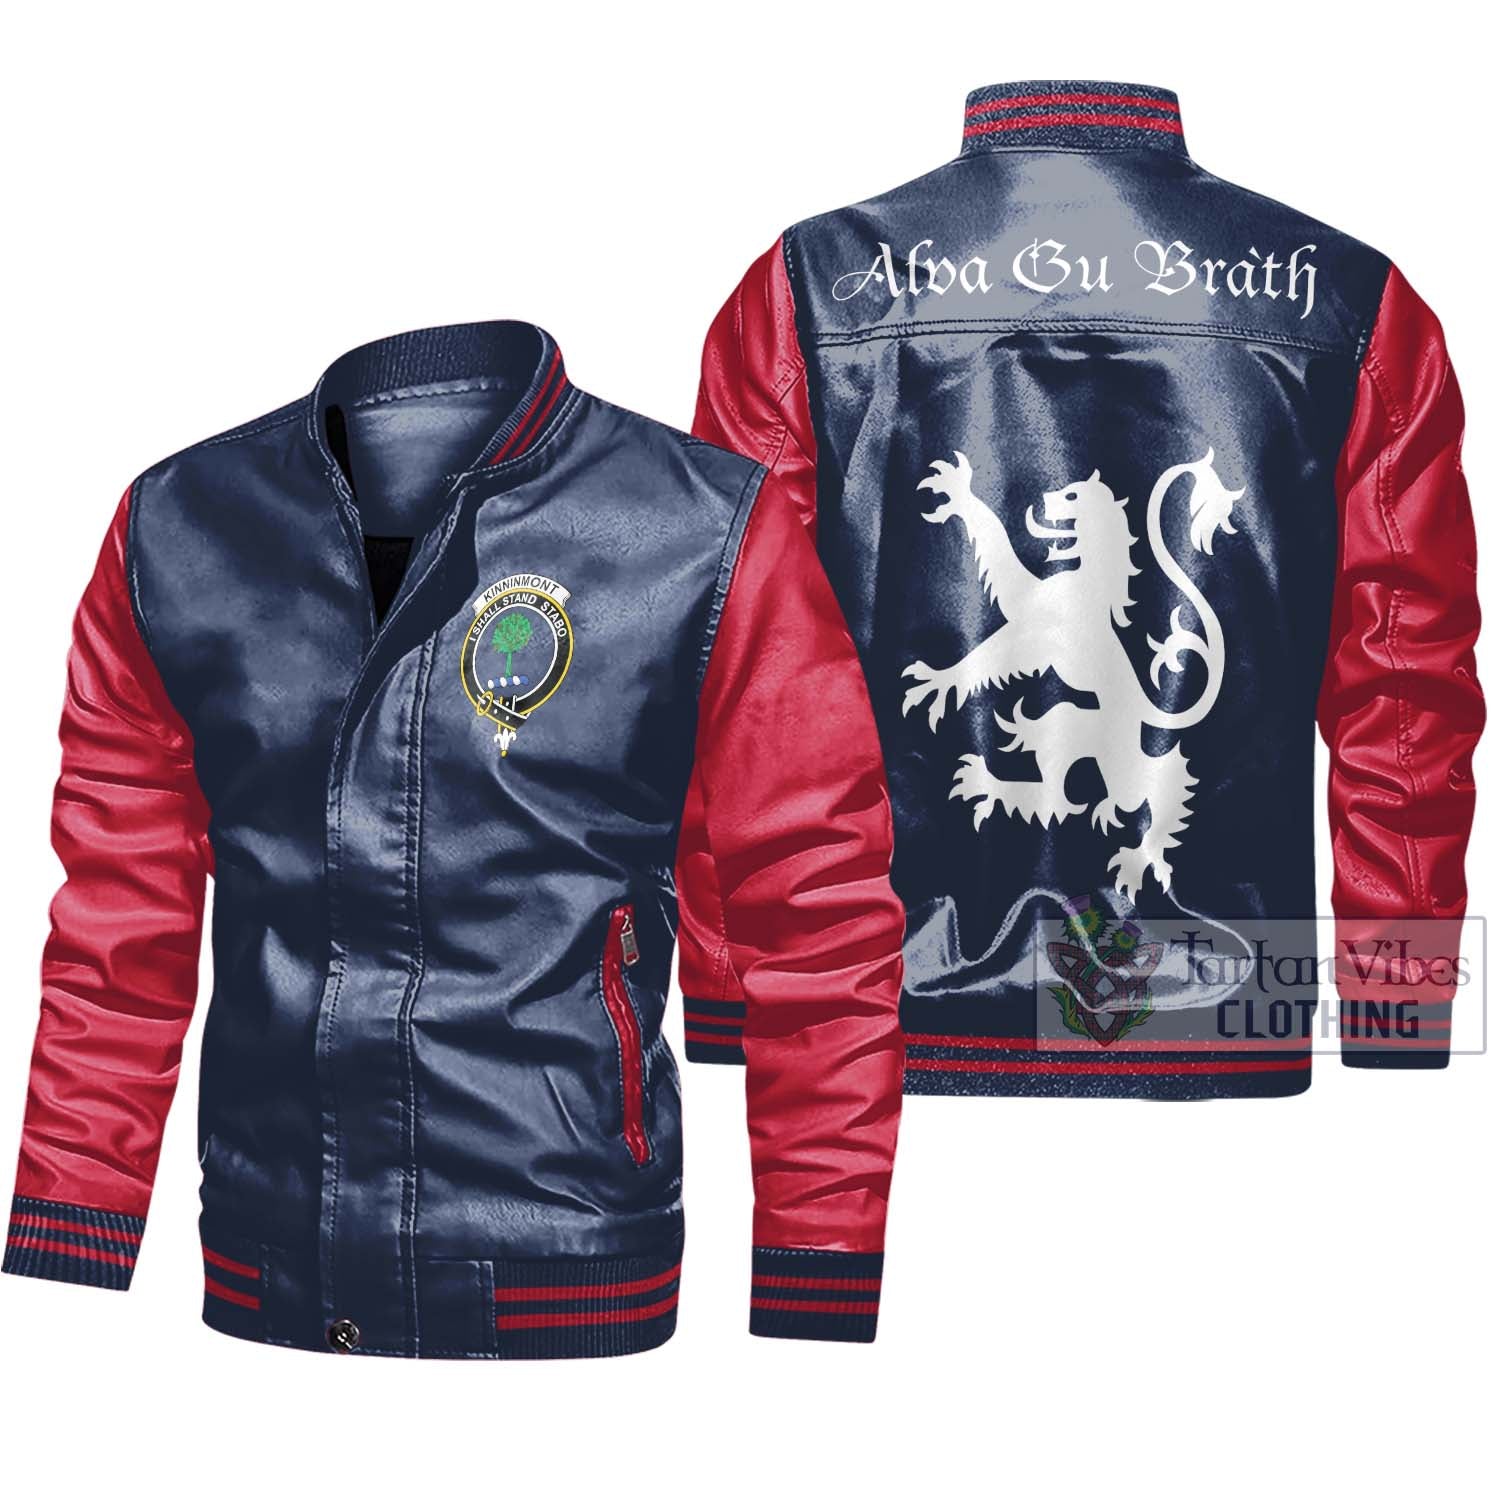 Tartan Vibes Clothing Kinninmont Family Crest Leather Bomber Jacket Lion Rampant Alba Gu Brath Style